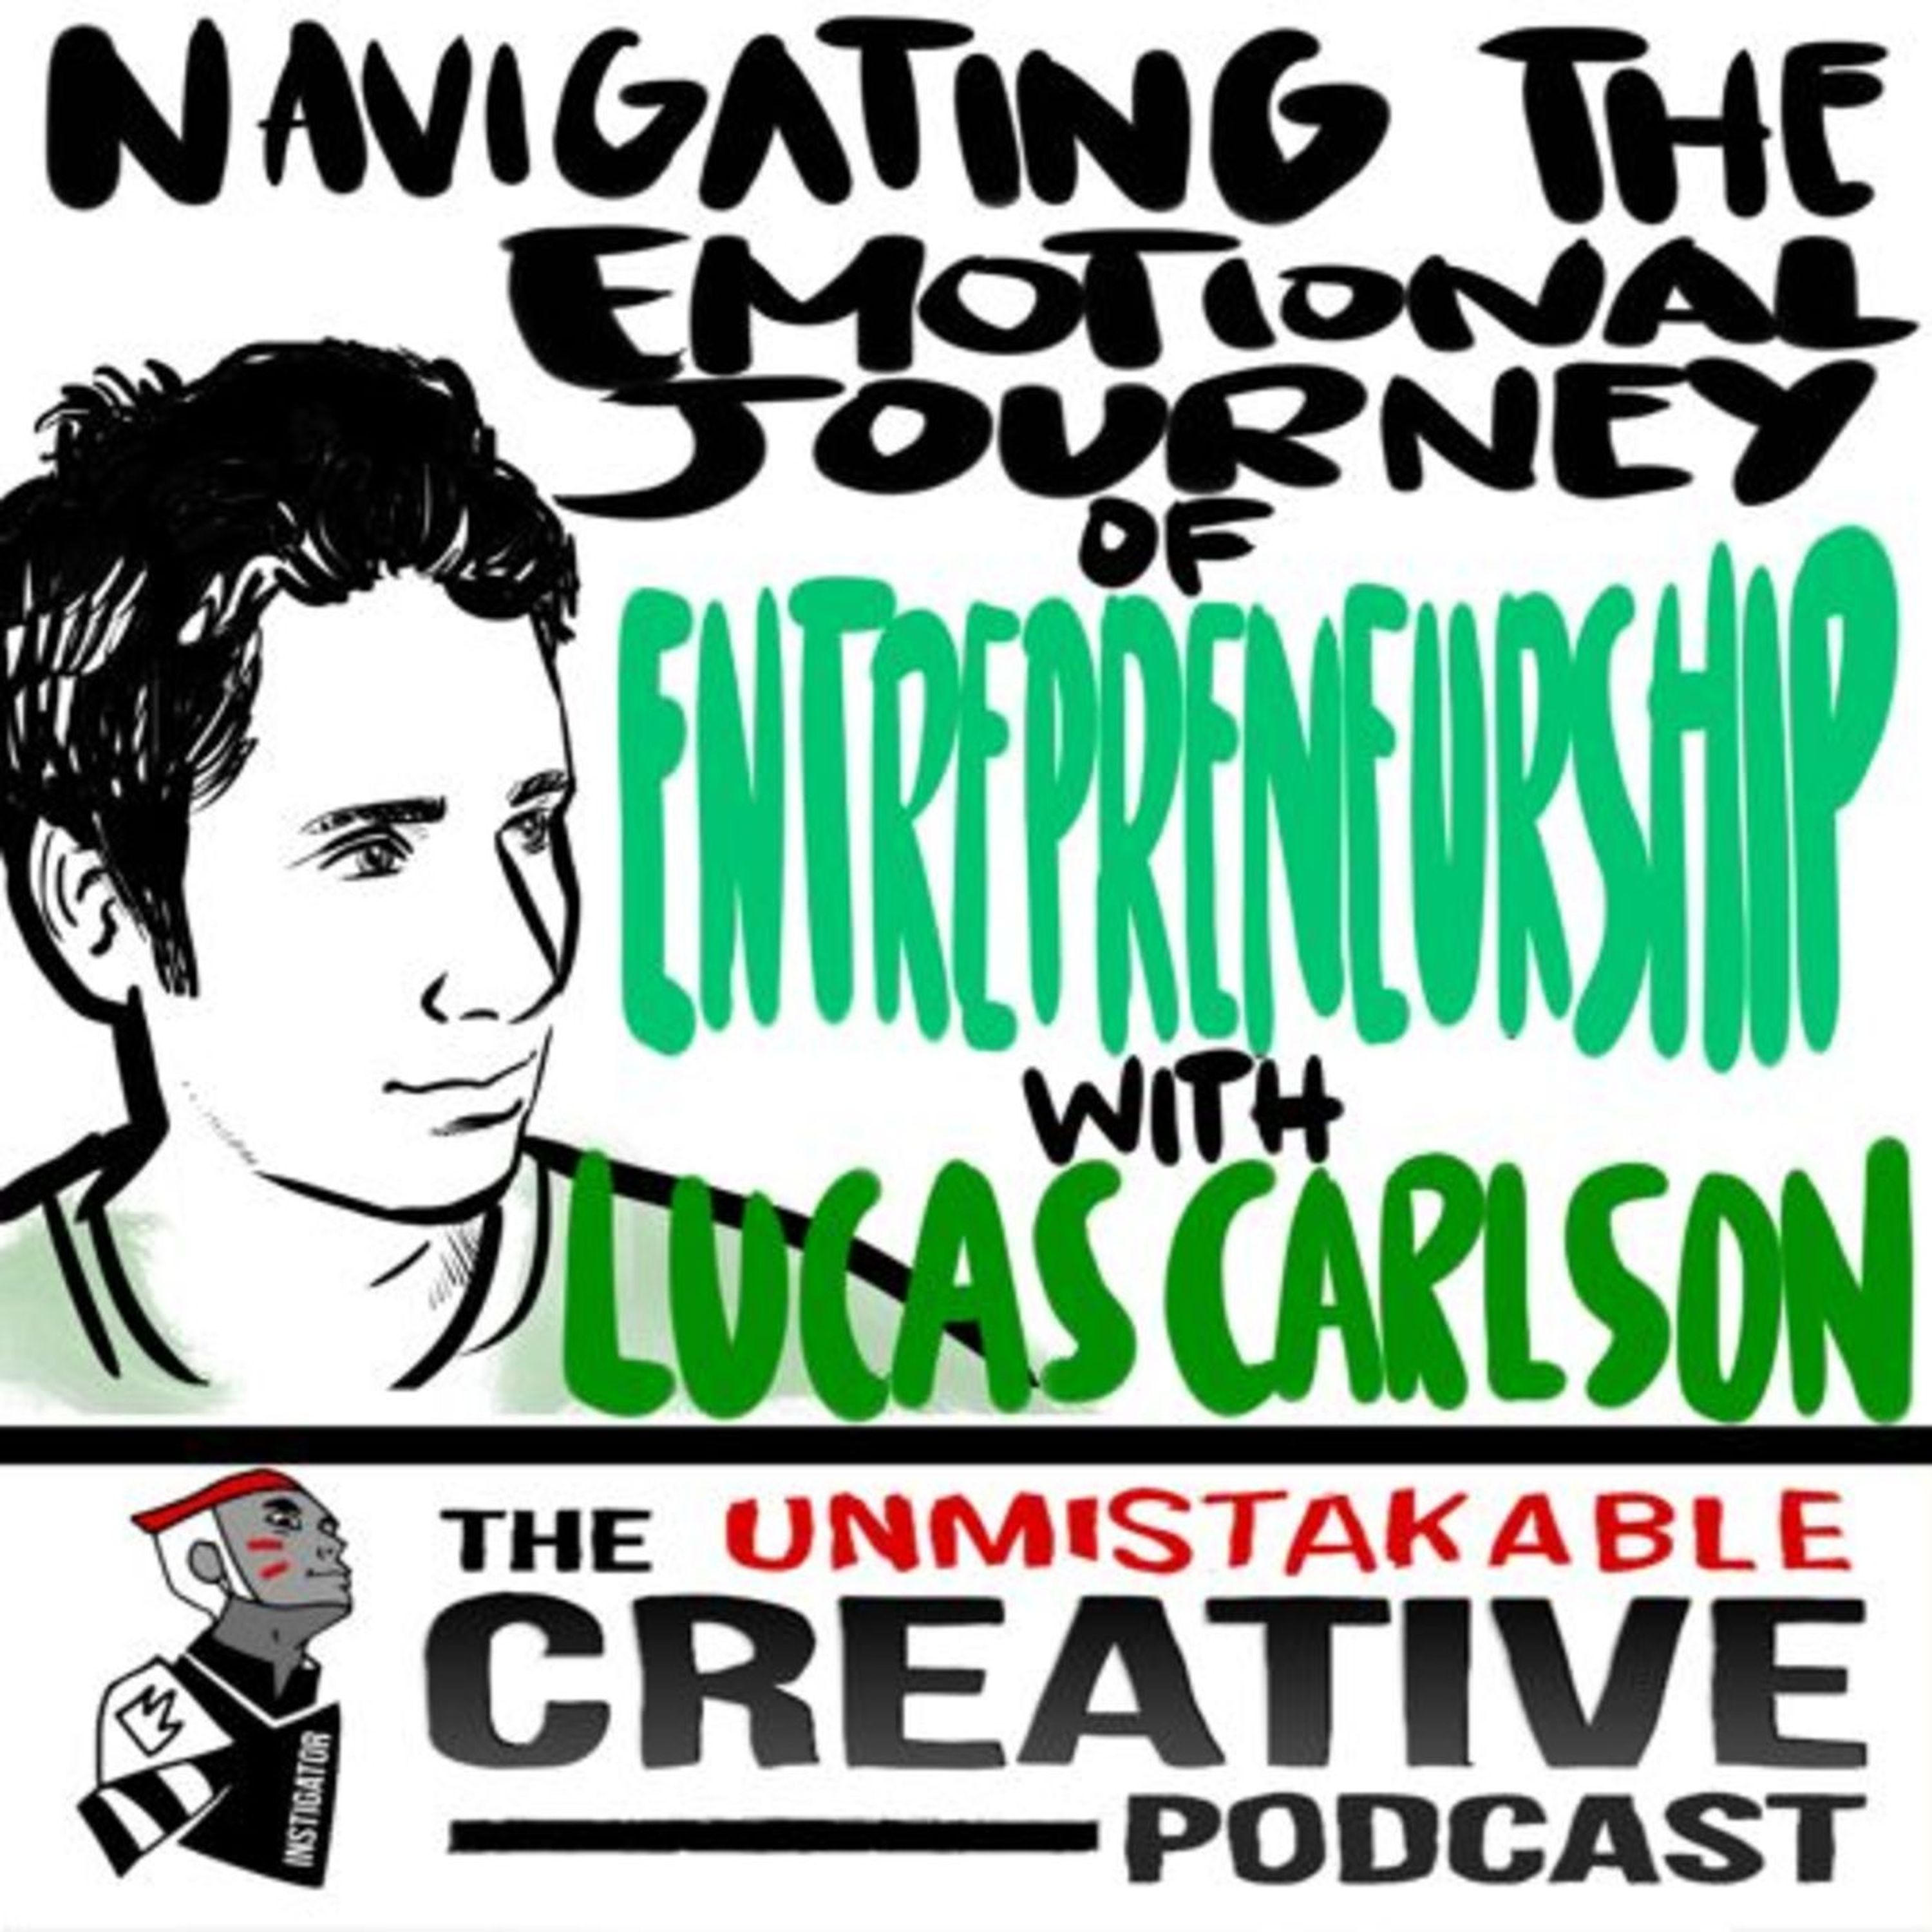 Navigating The Emotional Journey Of Entrepreneurship With Lucas Carlson